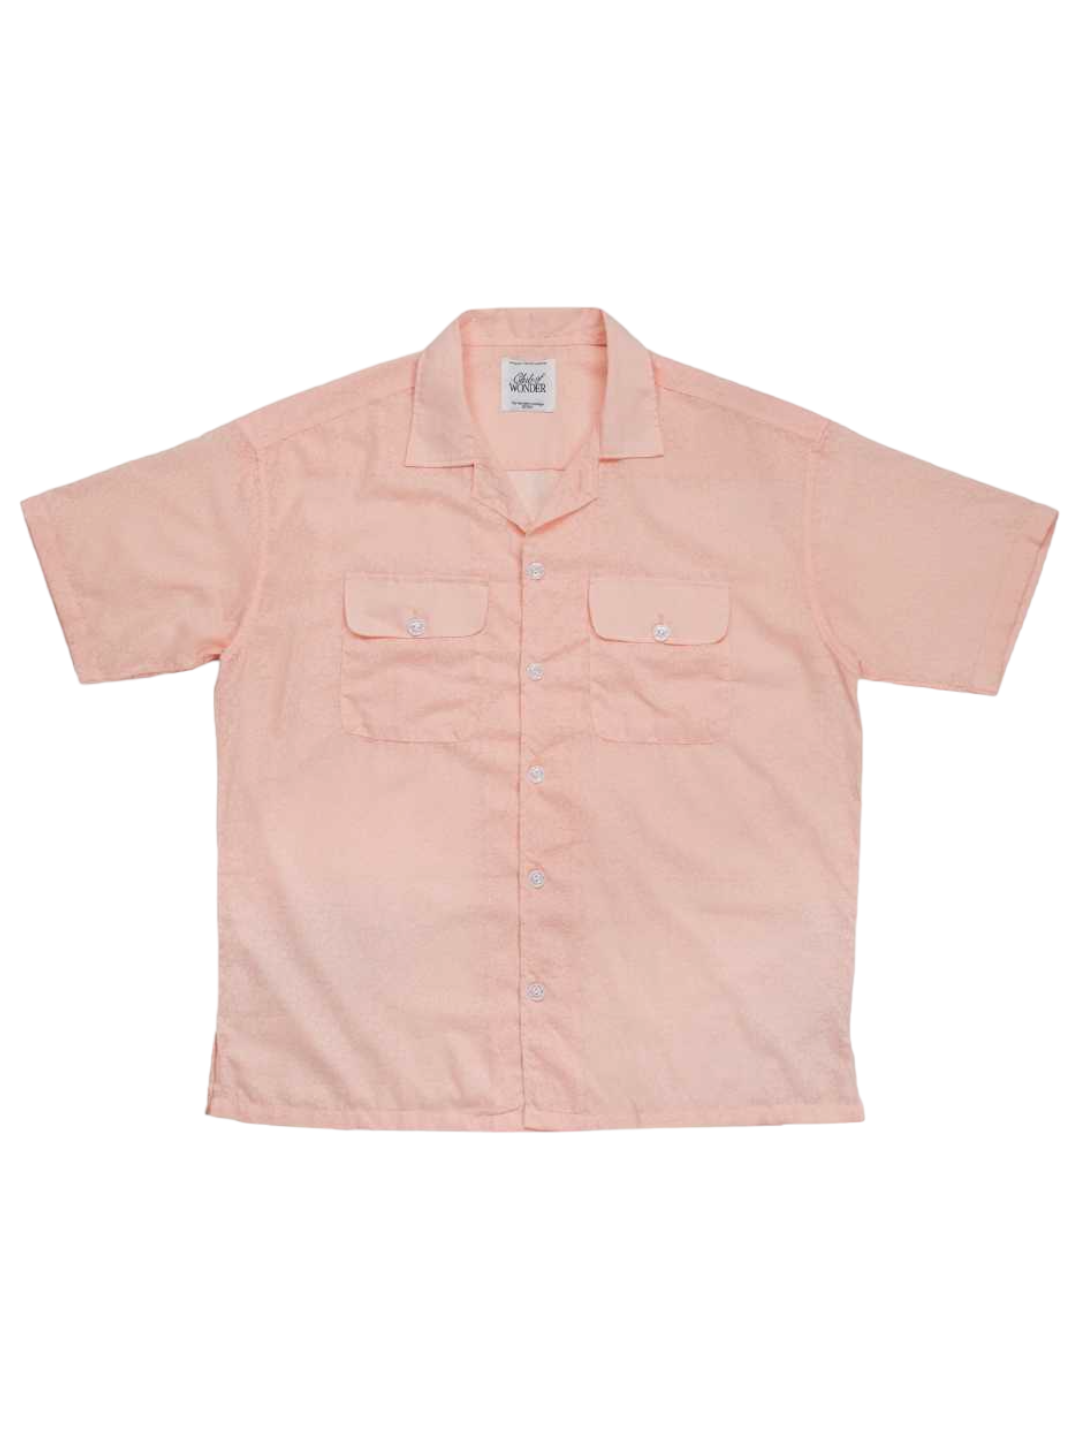 CLUB ✿ 02 Floral-Sheer Resort Shirt in Peach Pink